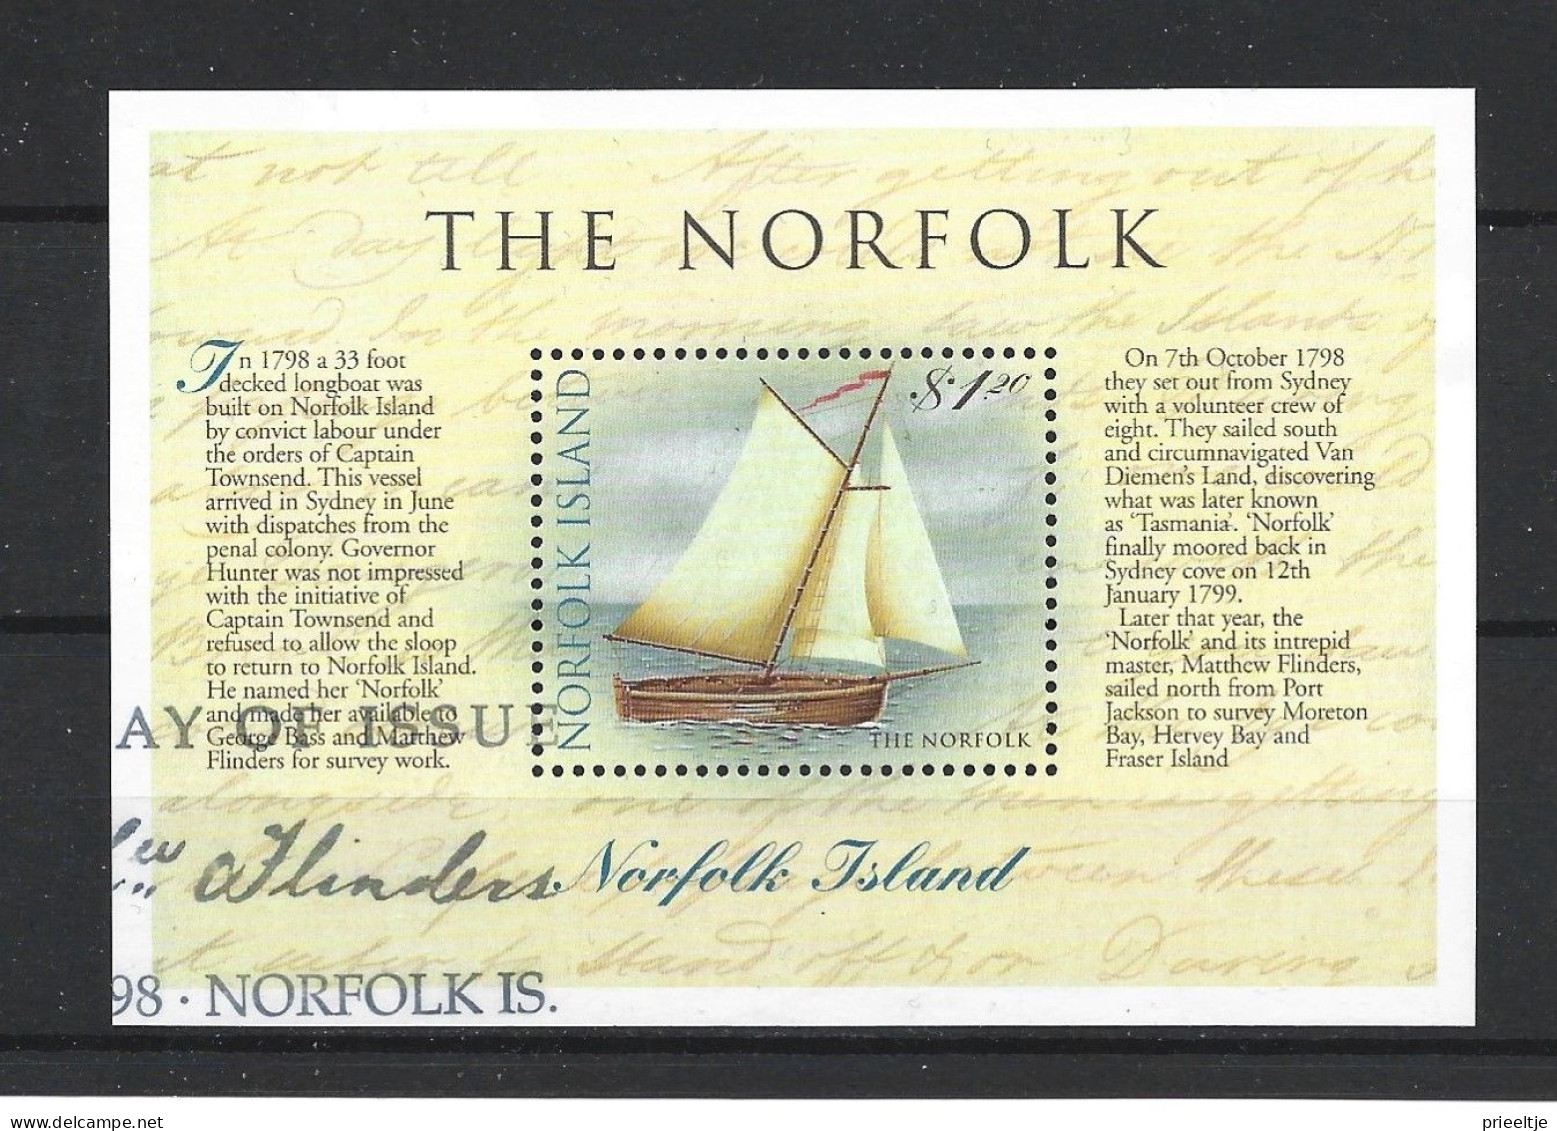 Norfolk 1998 Construction Of 'The Norfolk' Bicentenary  S/S Y.T. BF 29  (0) - Isla Norfolk